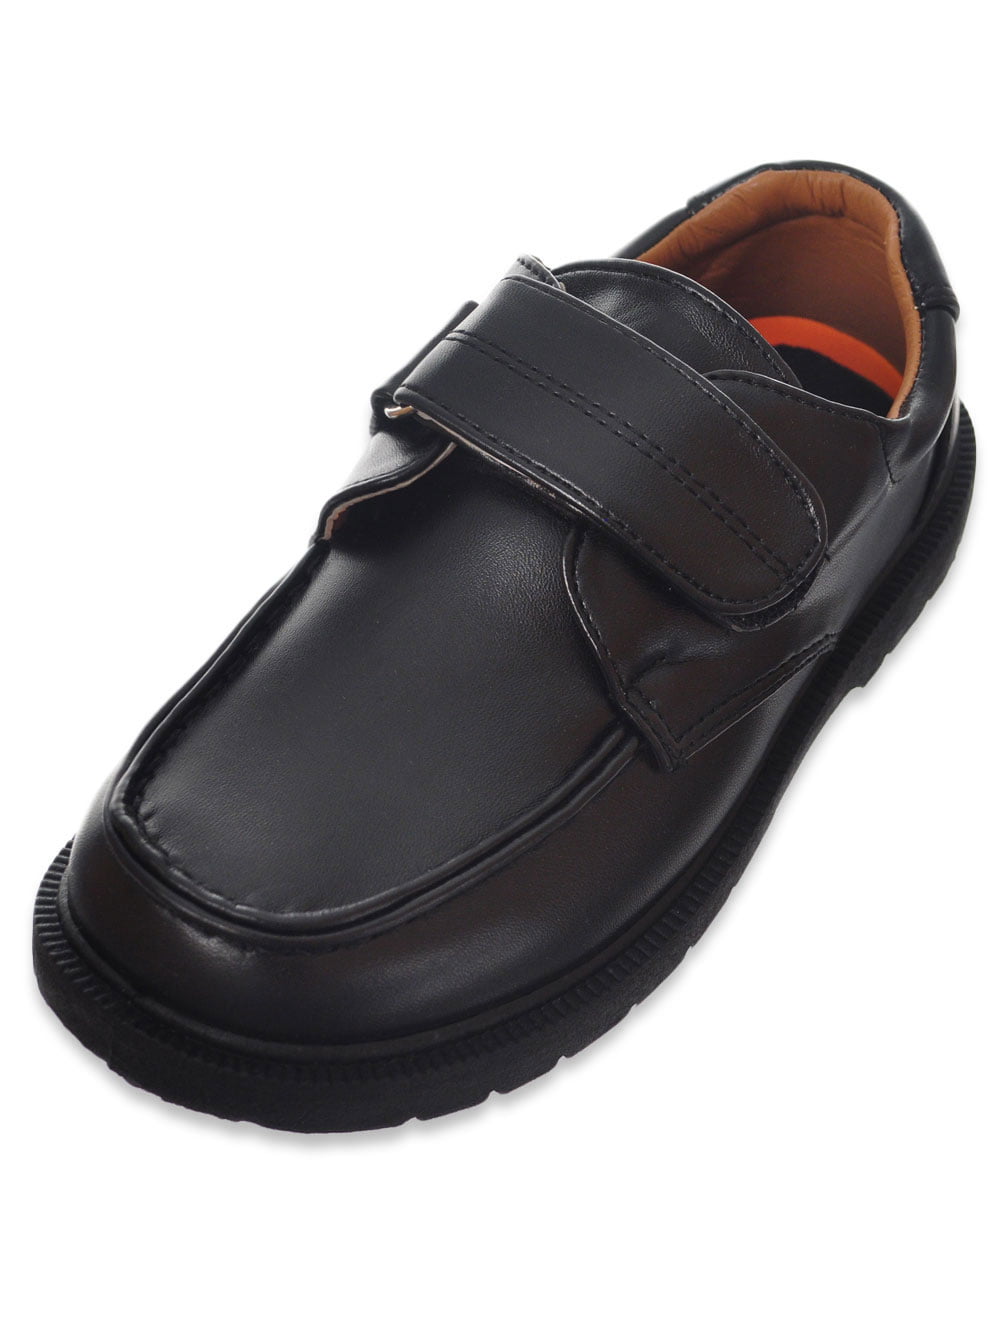 Danuccelli Boys' School Shoes (Sizes 